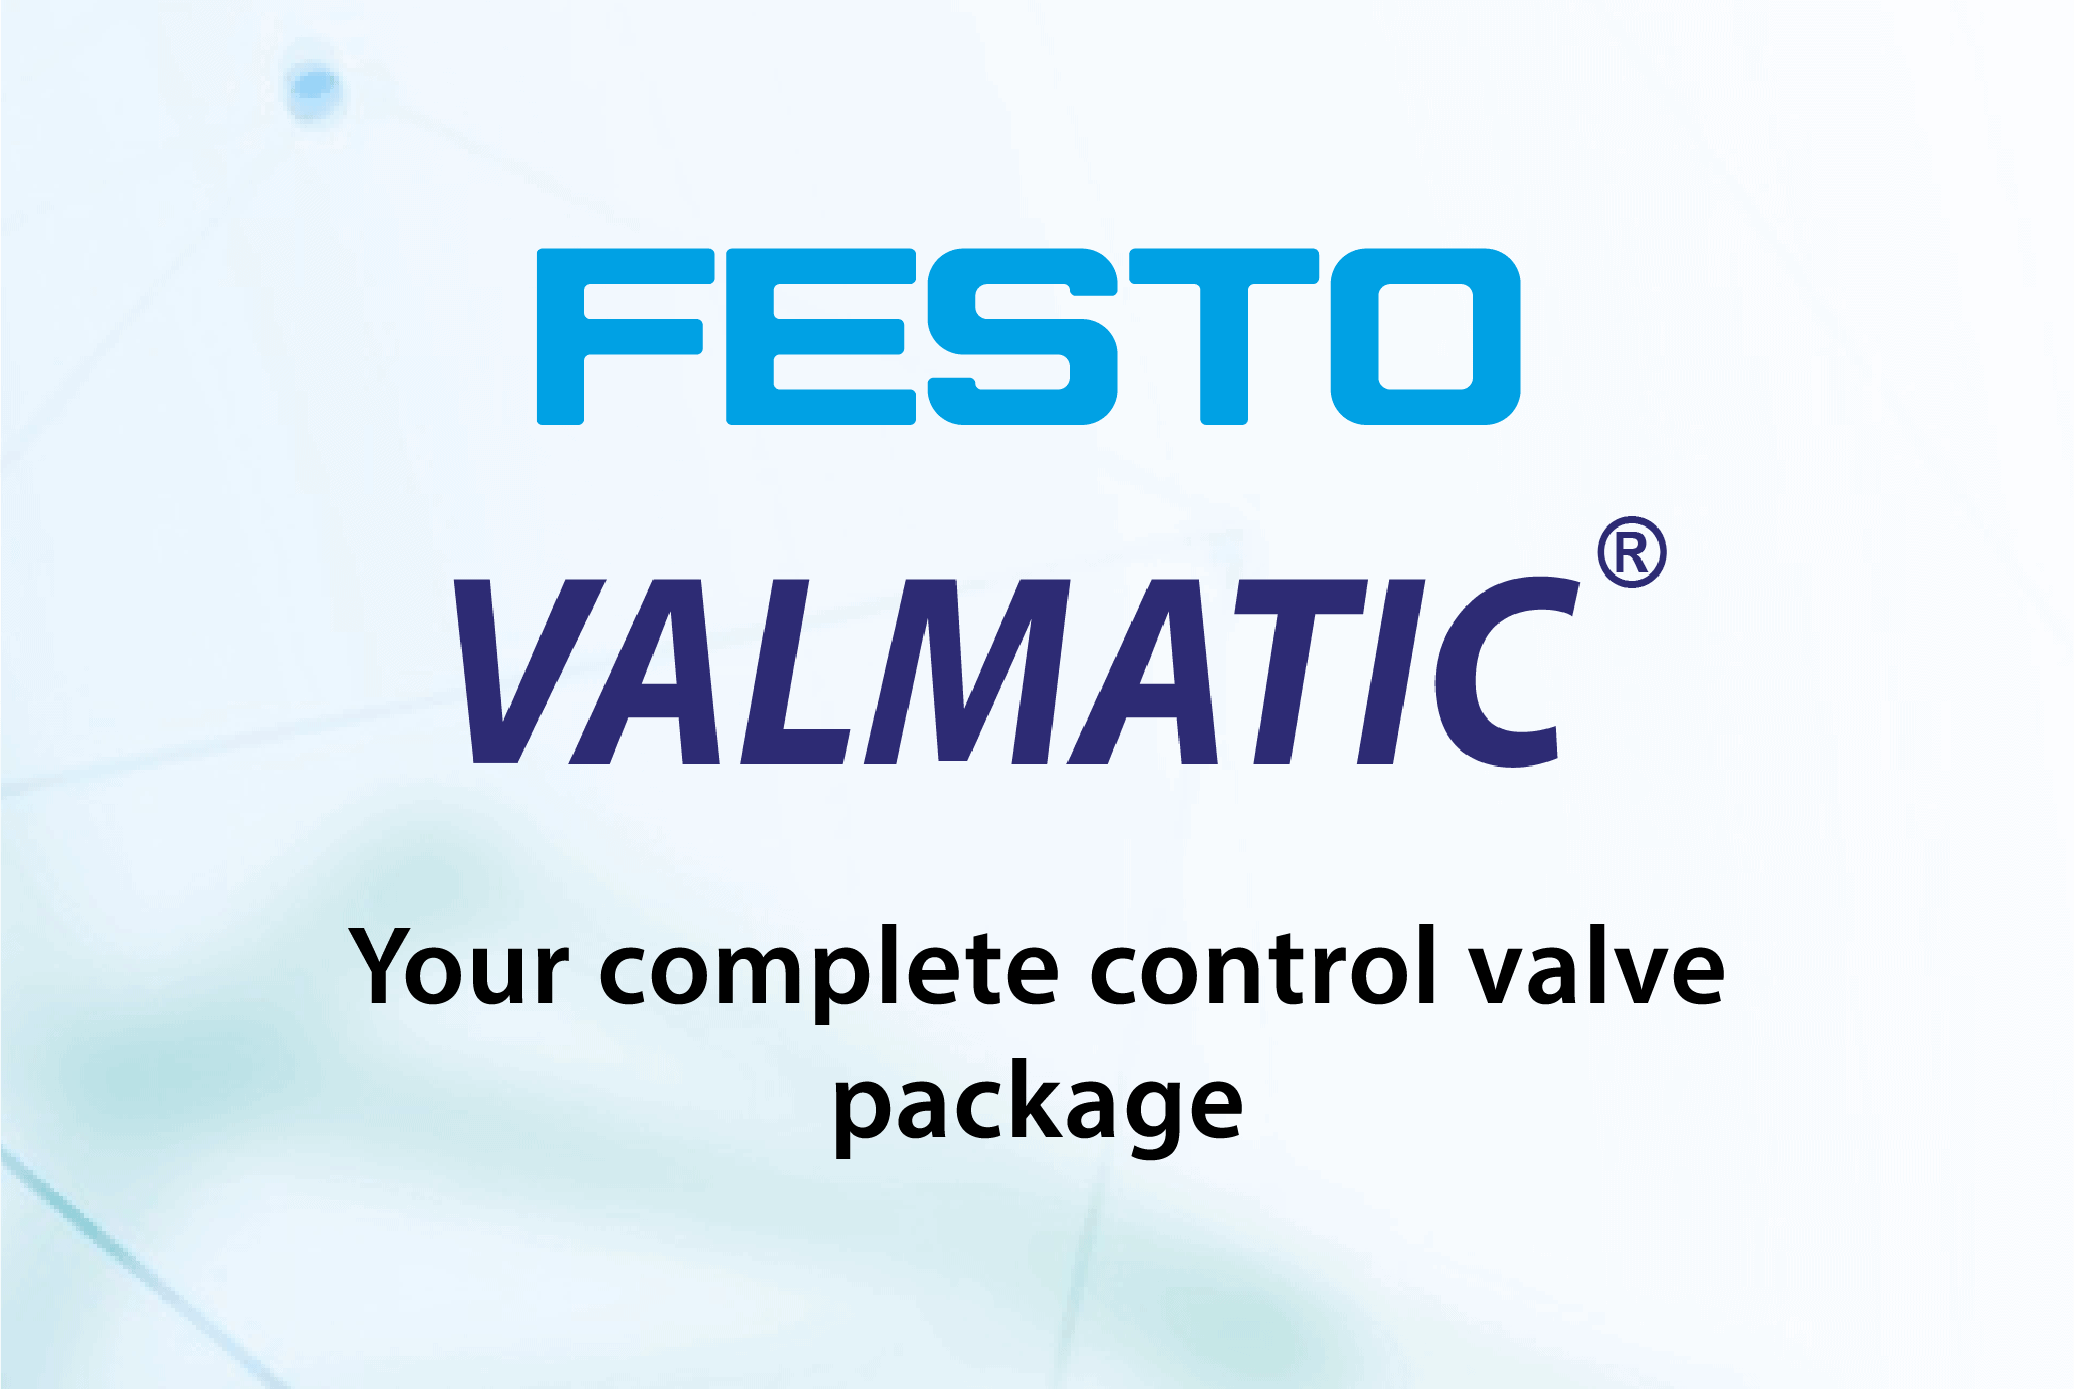 Valmatic Festo Partnership